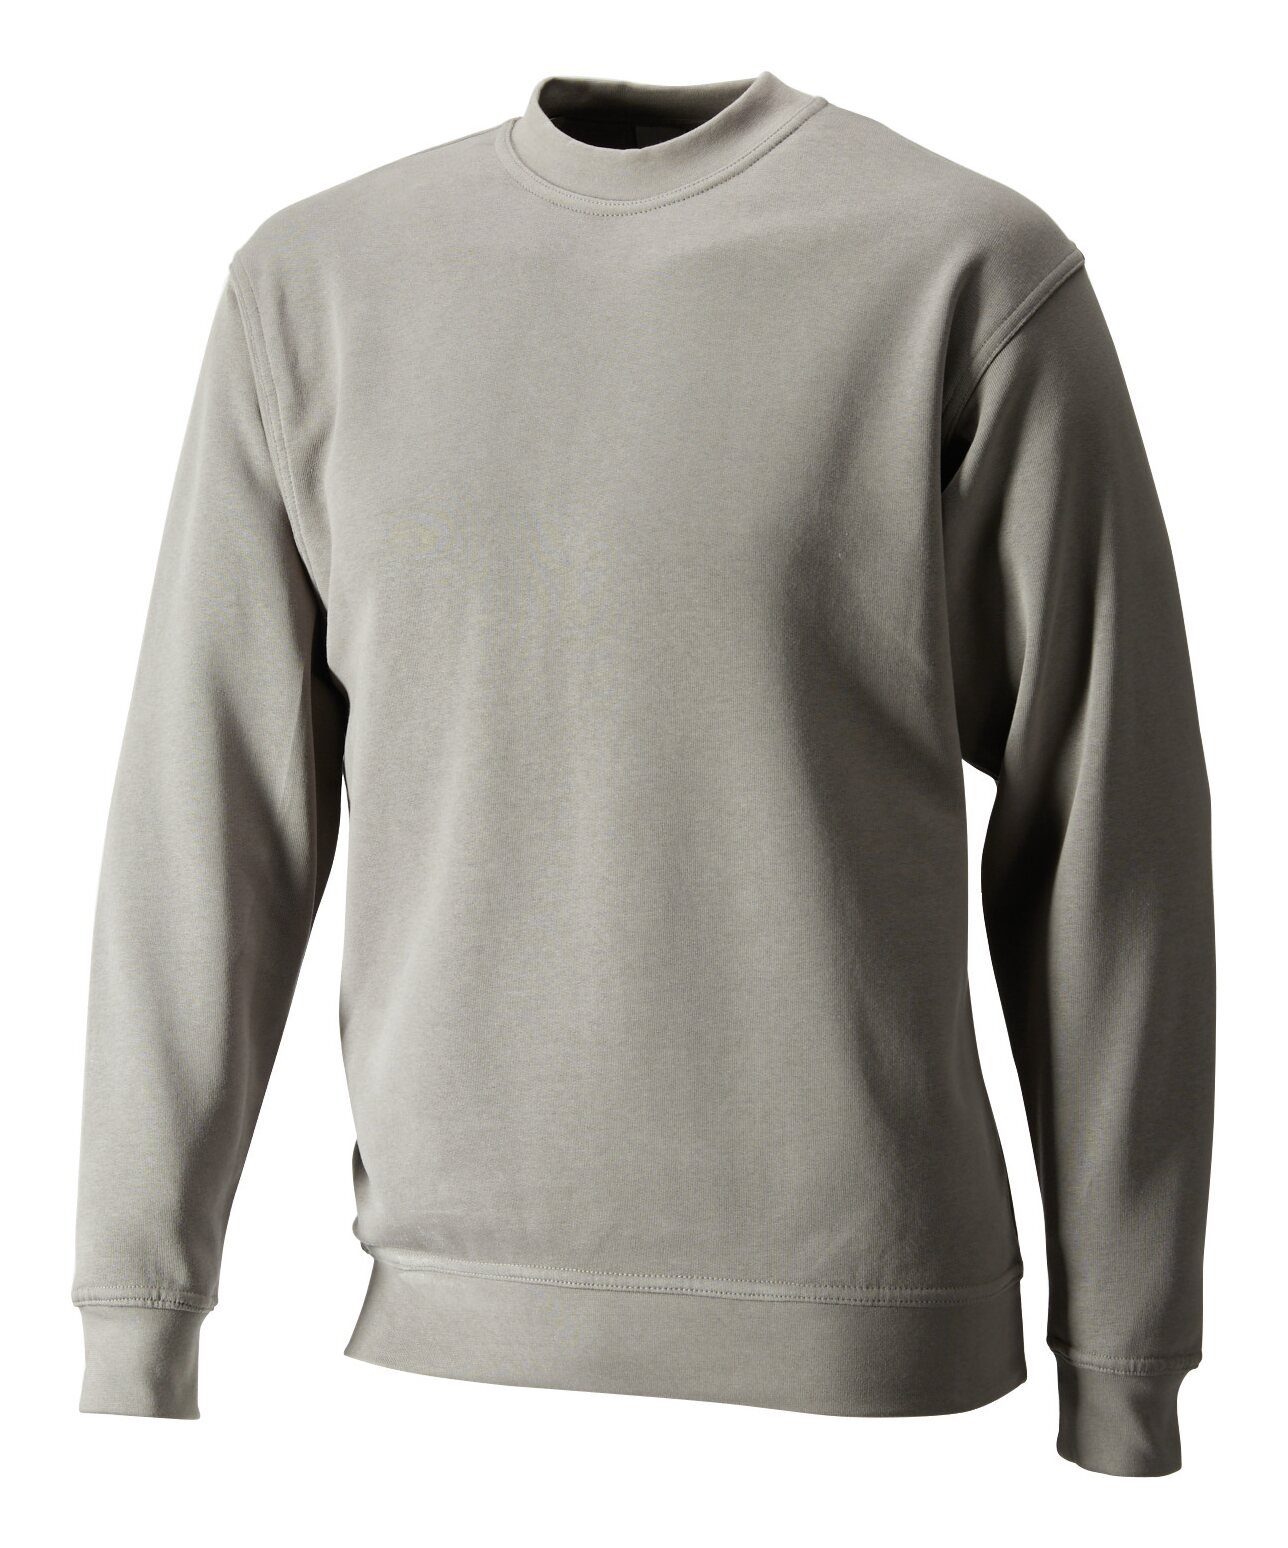 Promodoro Sweatshirt Größe M, new light grey